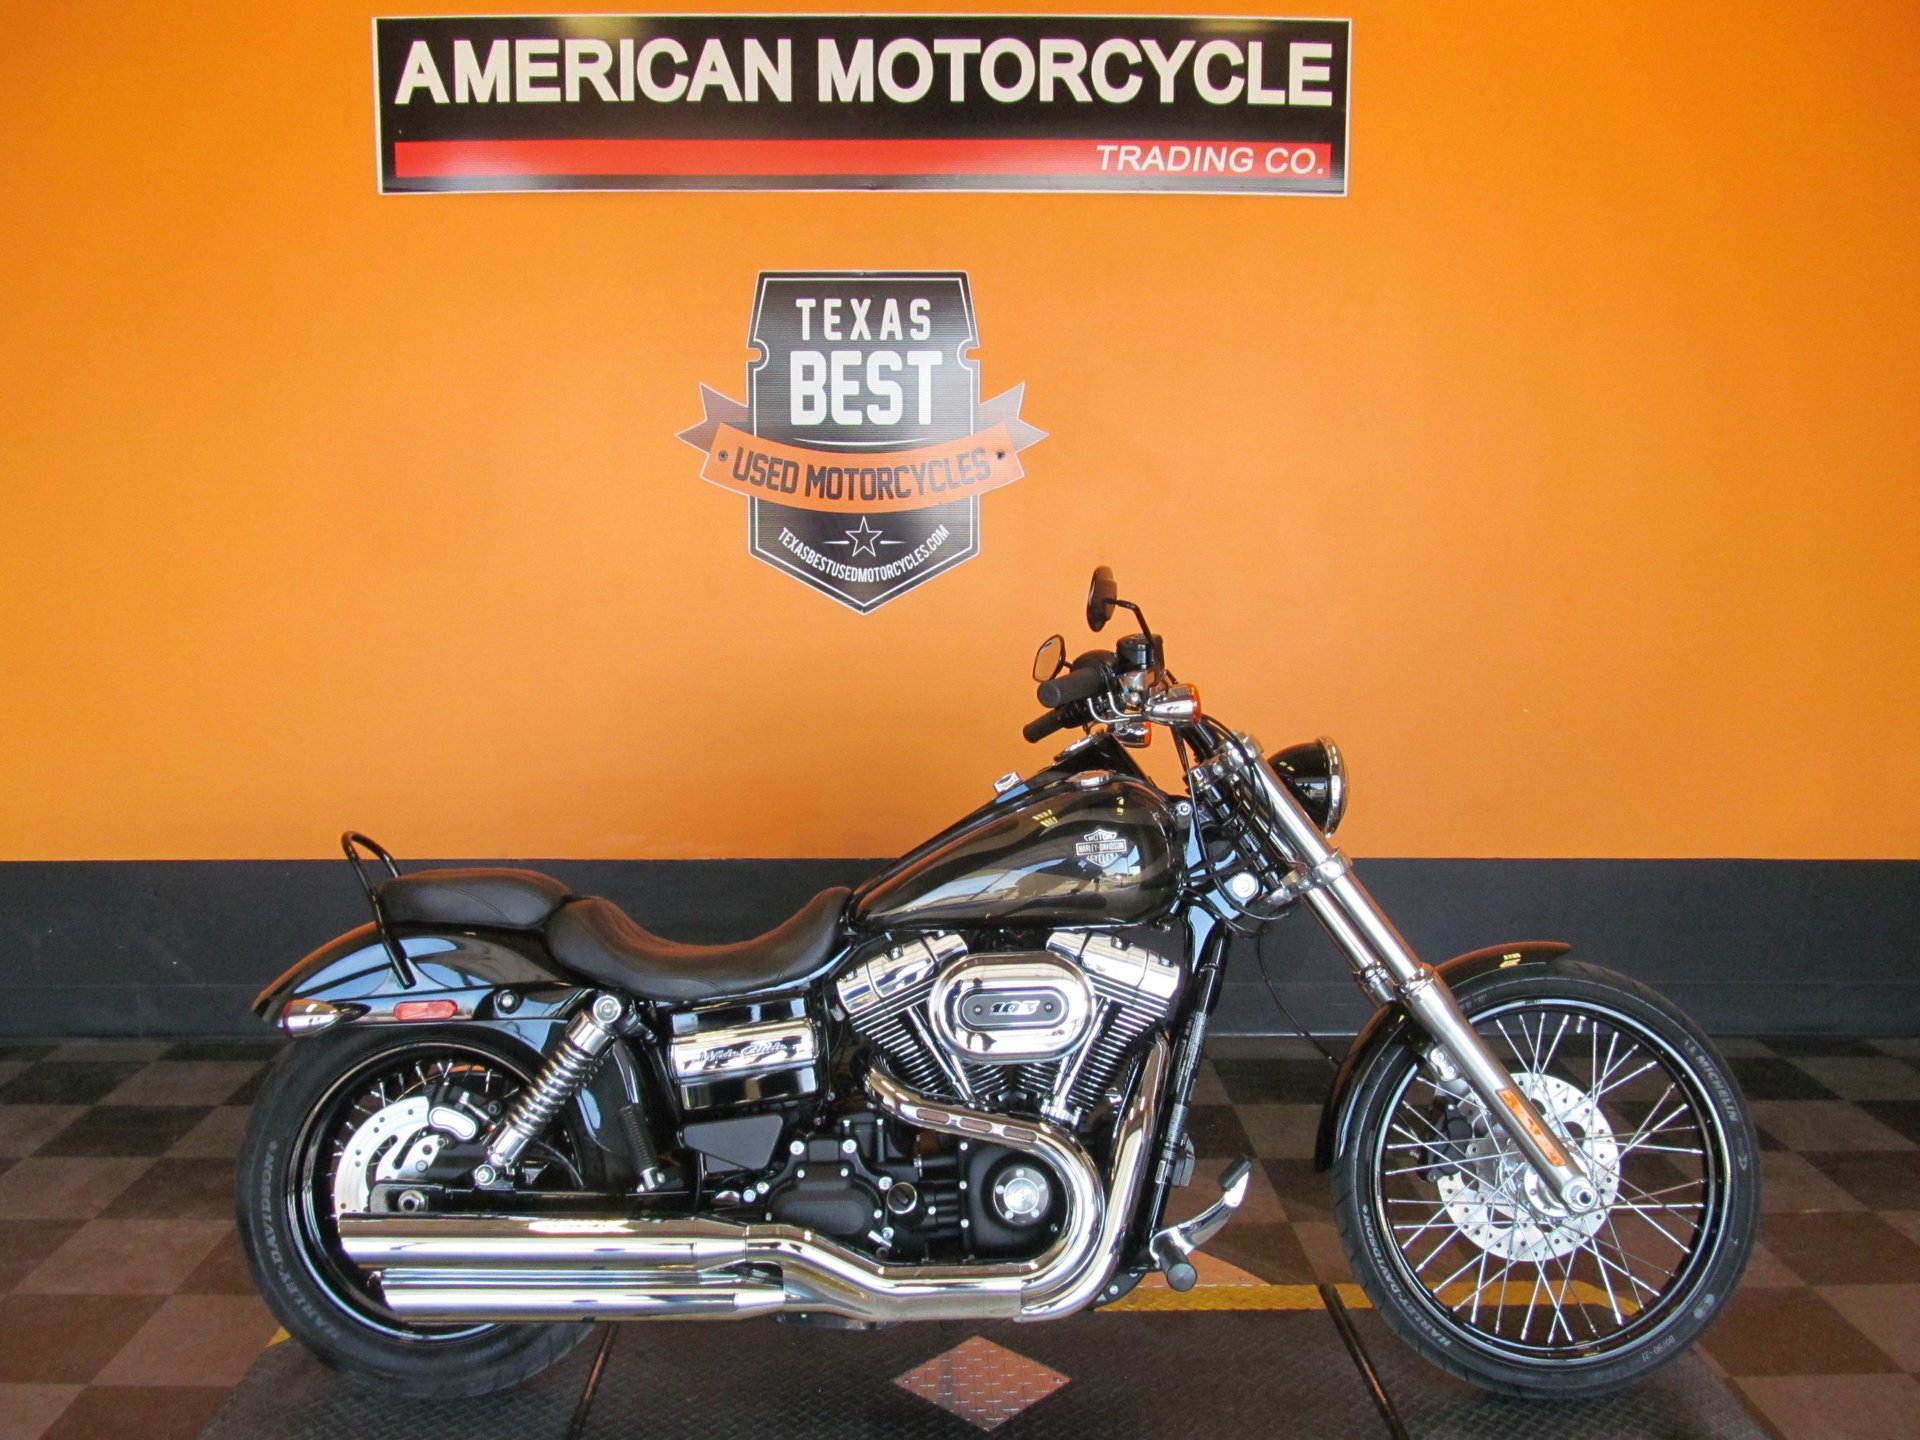 2016 Harley Davidson Dyna Wide Glide American Motorcycle Trading Company Used Harley Davidson Motorcycles